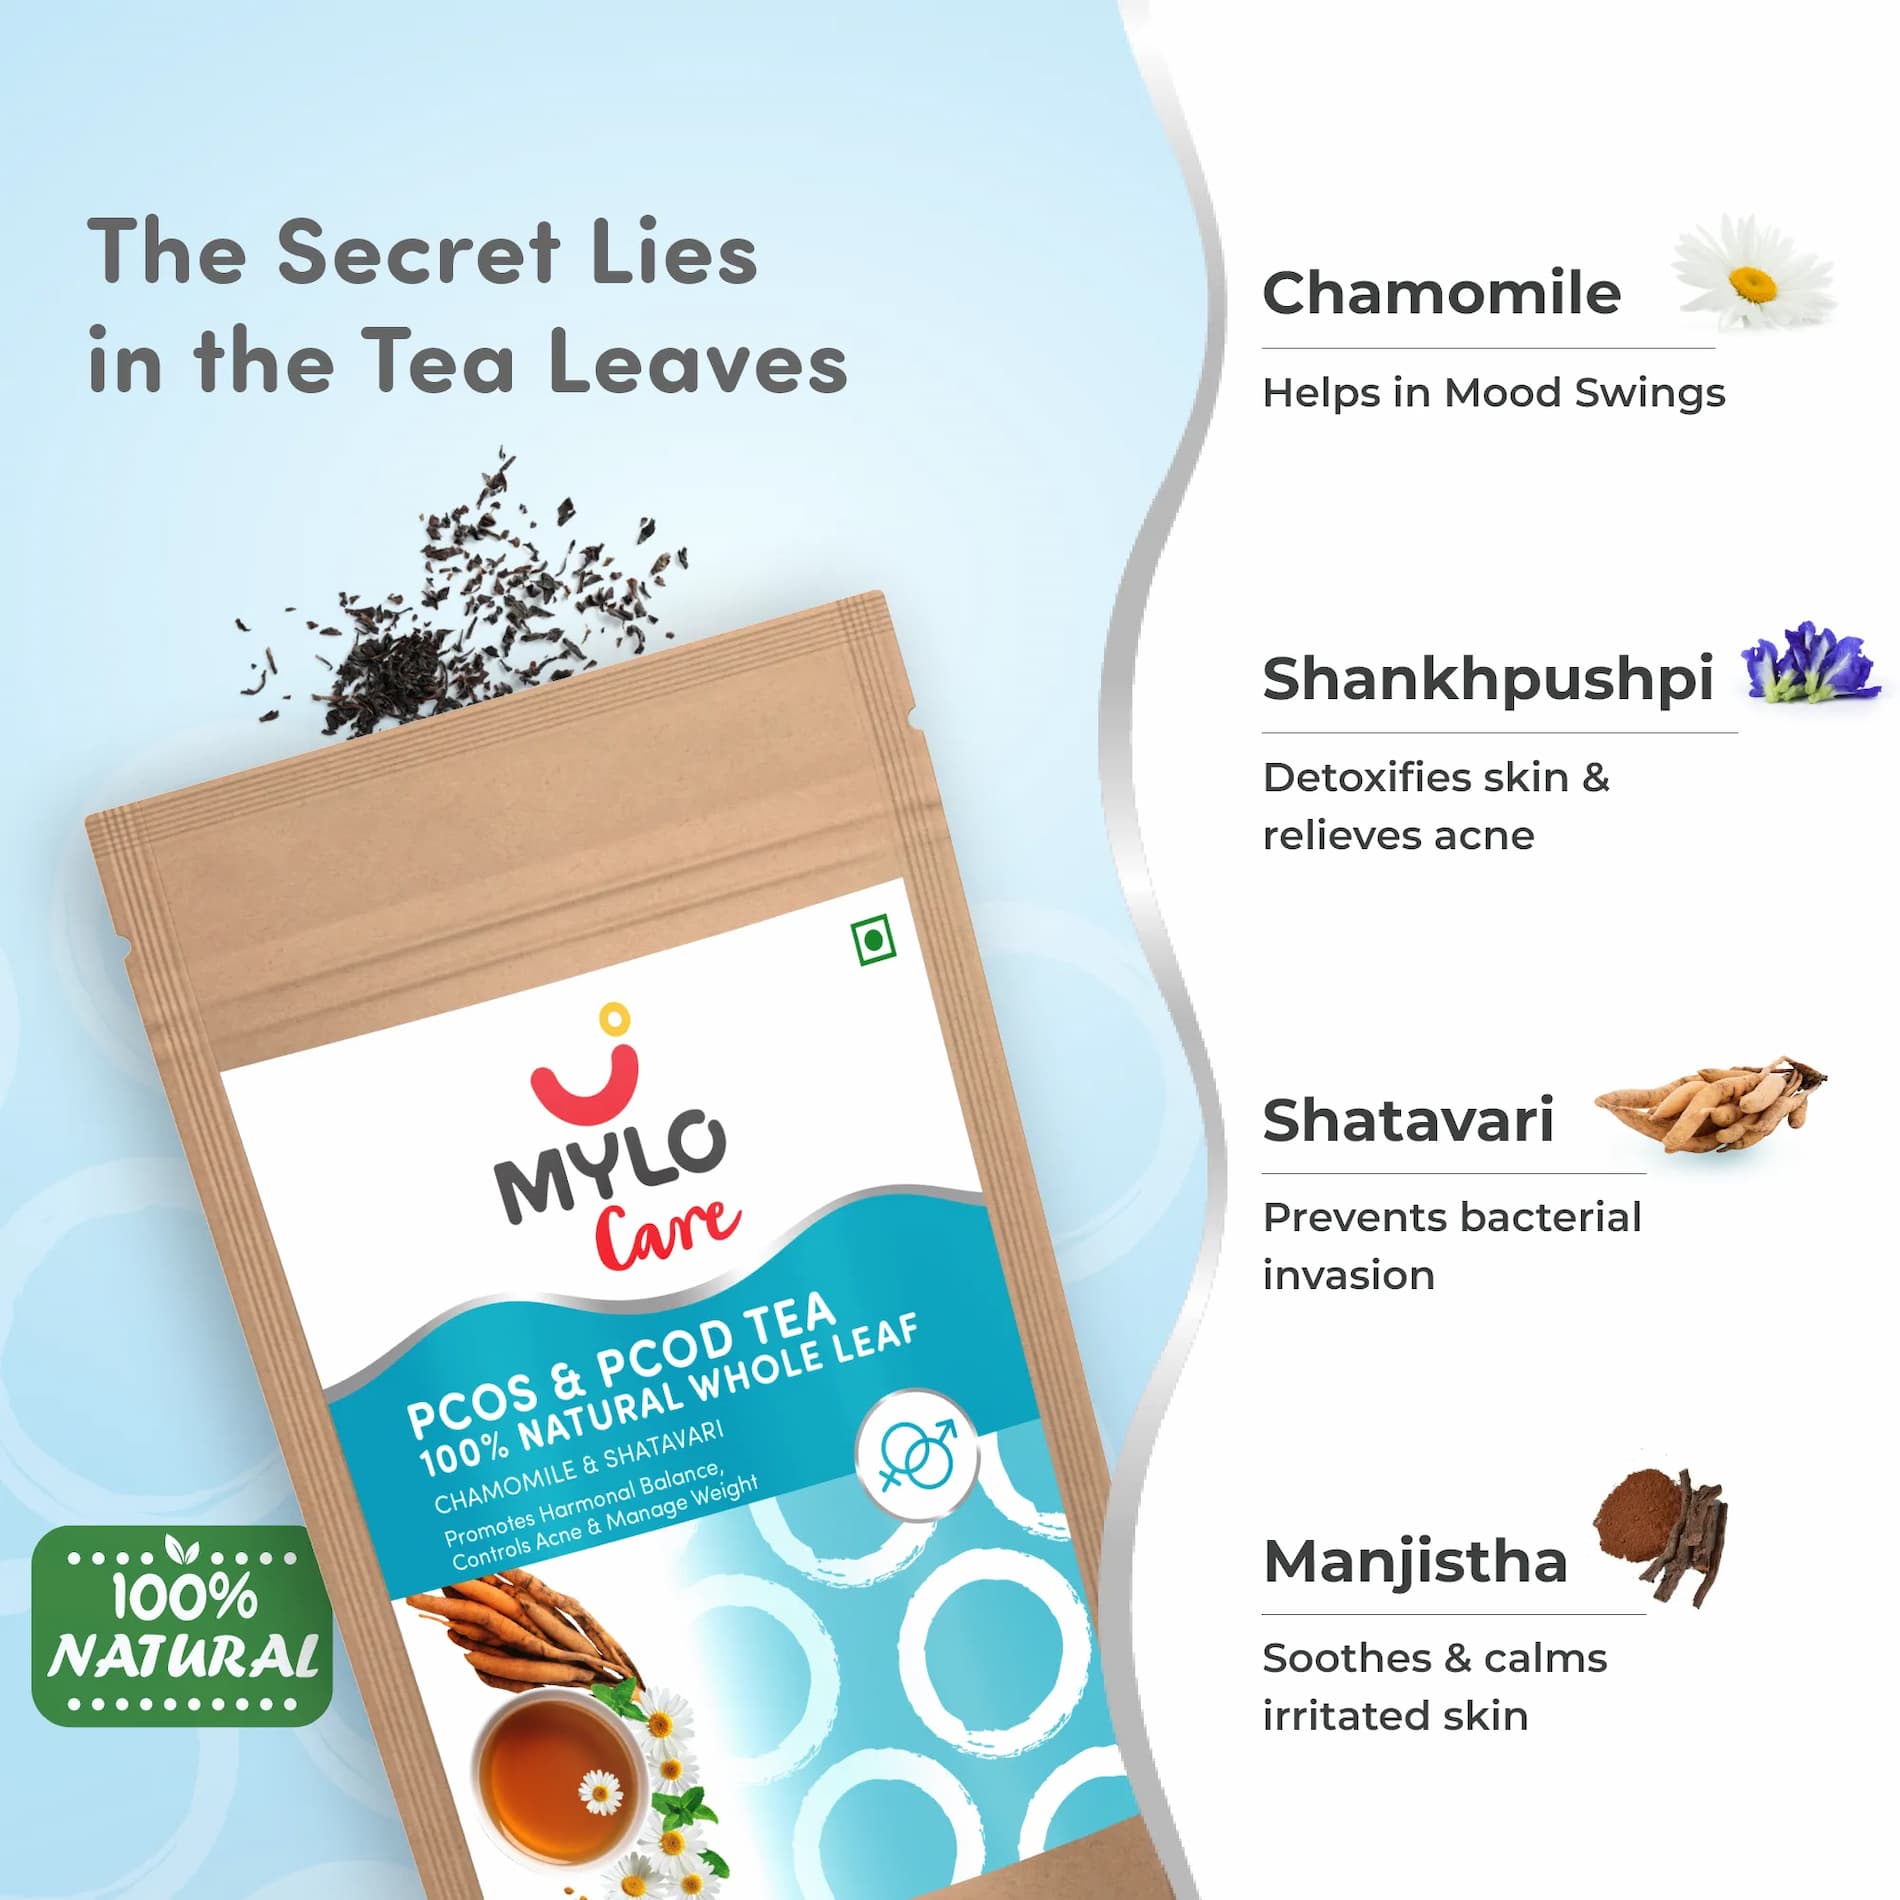 100% Natural PCOS & PCOD Tea - 30 Tea Bags - Pack Of 2